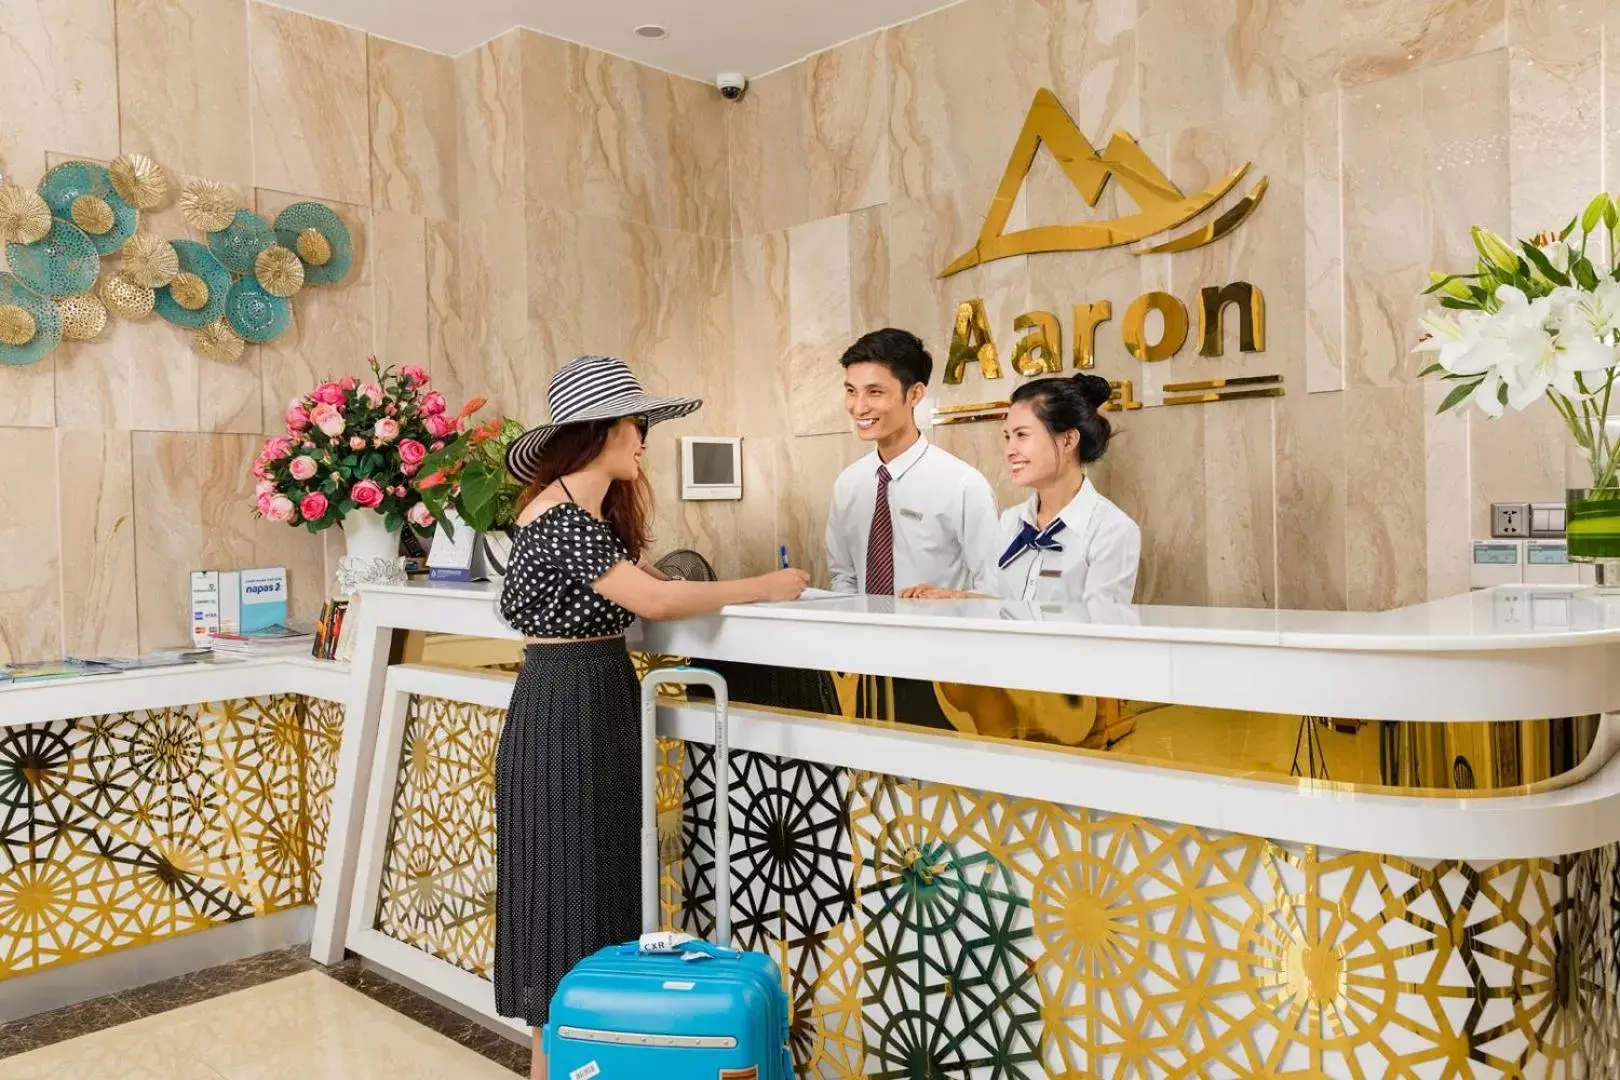 Staff in Aaron Hotel